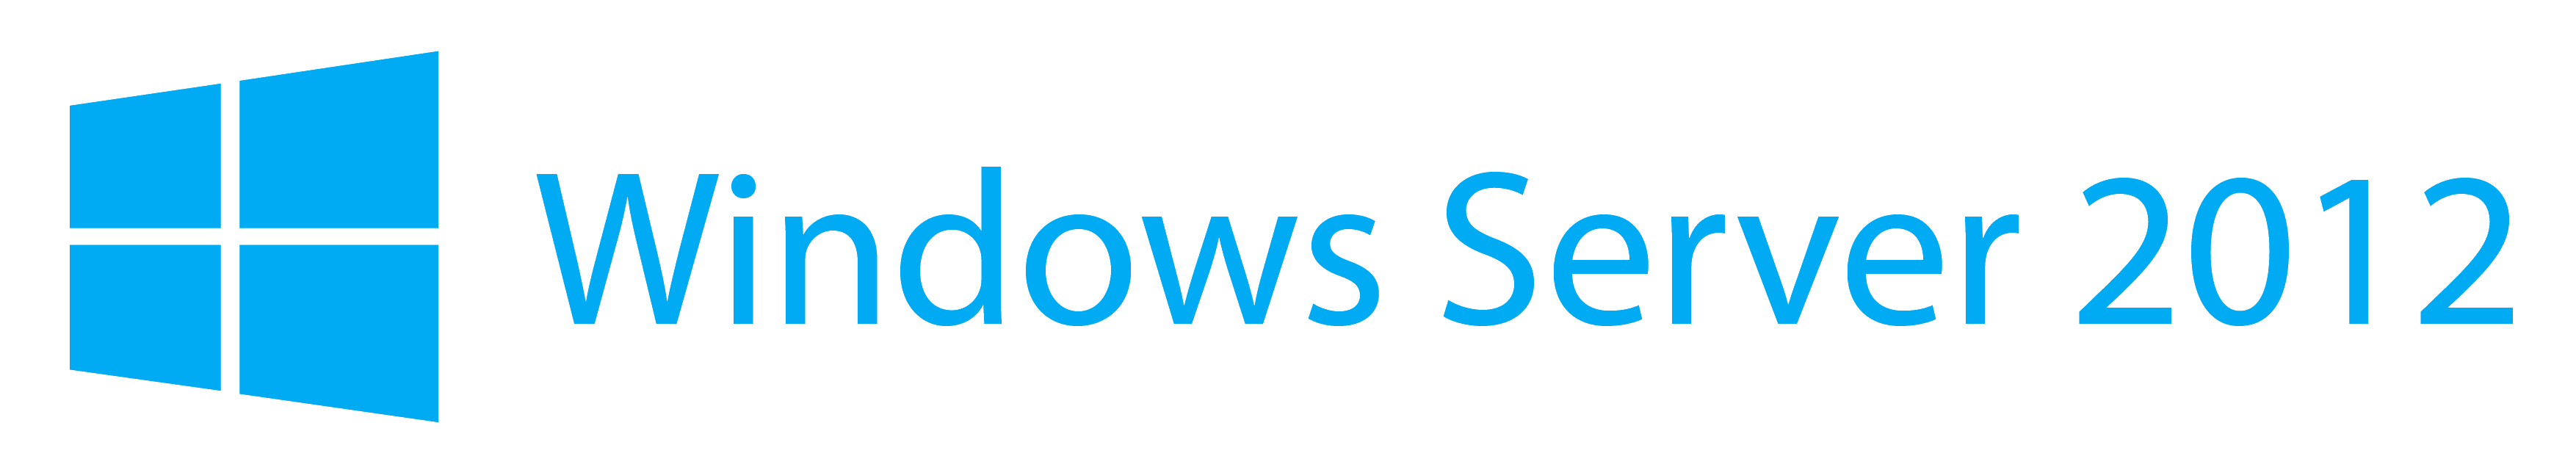 Windows Server 2012 Logo - File:Windows server 2012-logo.png - Wikimedia Commons